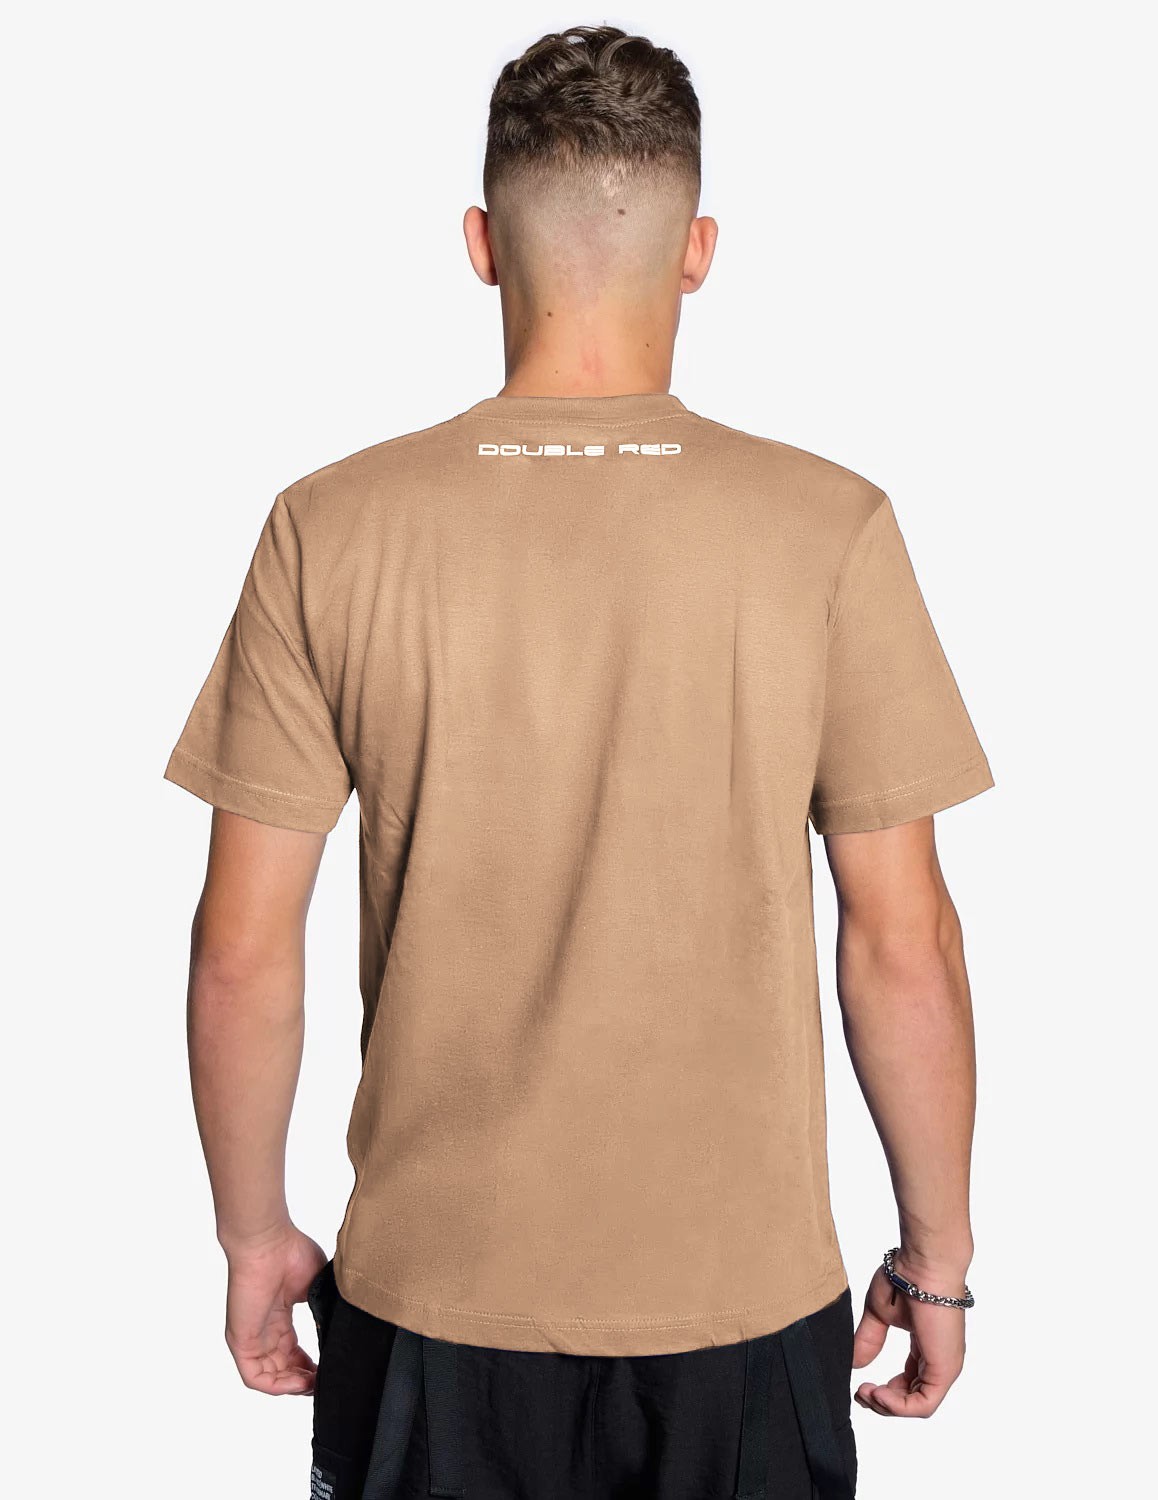 CARBONARO™ T-shirt Sand